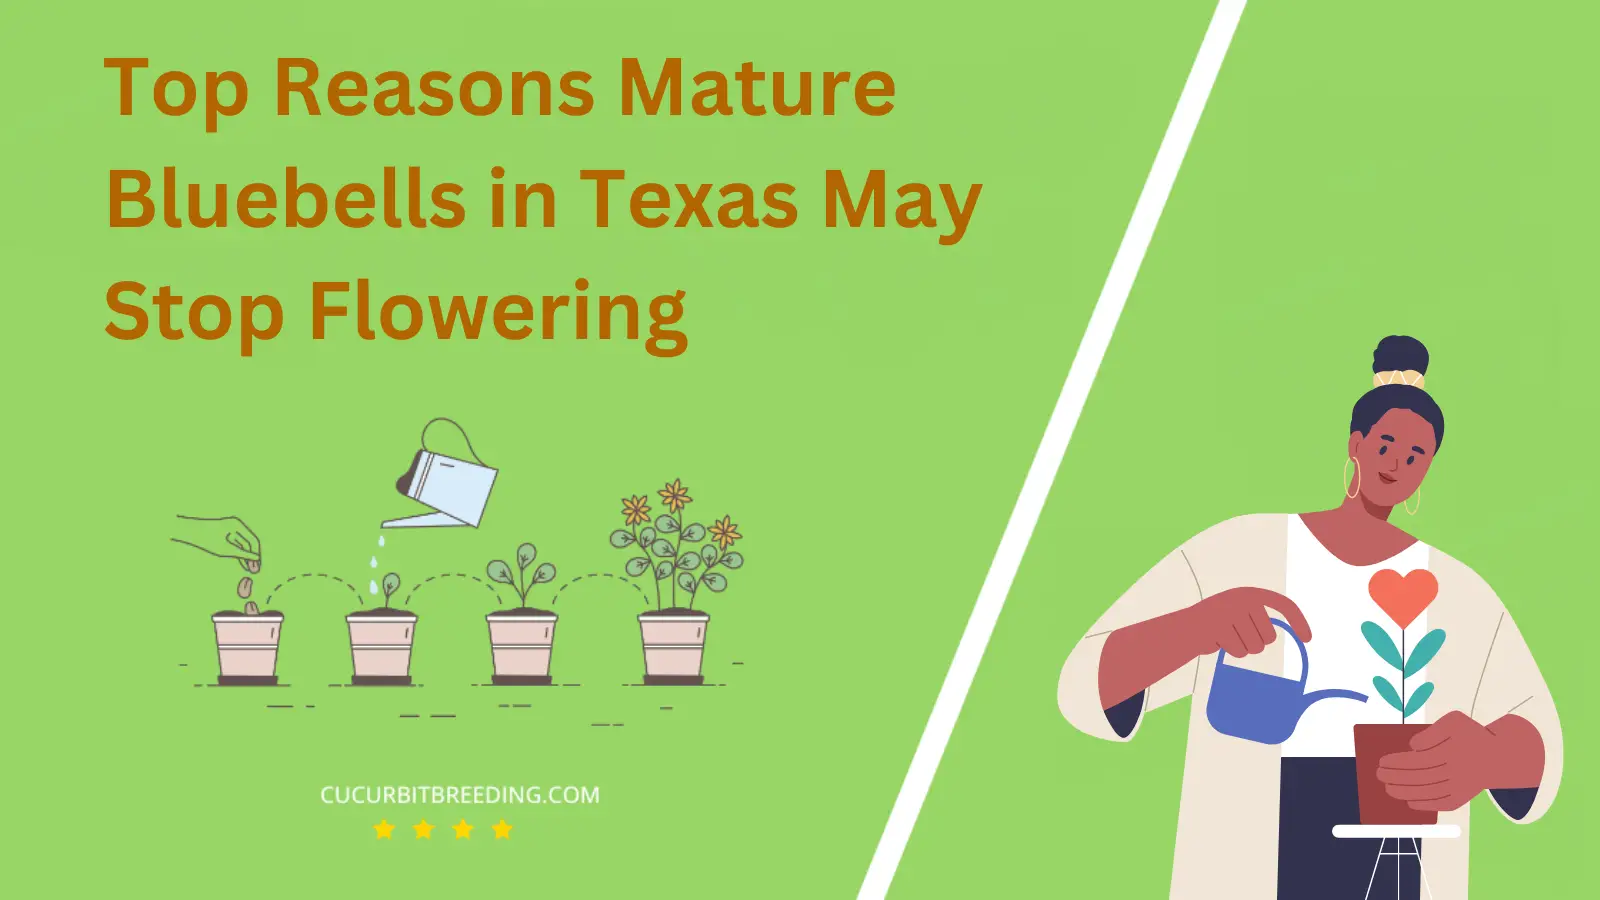 Top Reasons Mature Bluebells in Texas May Stop Flowering